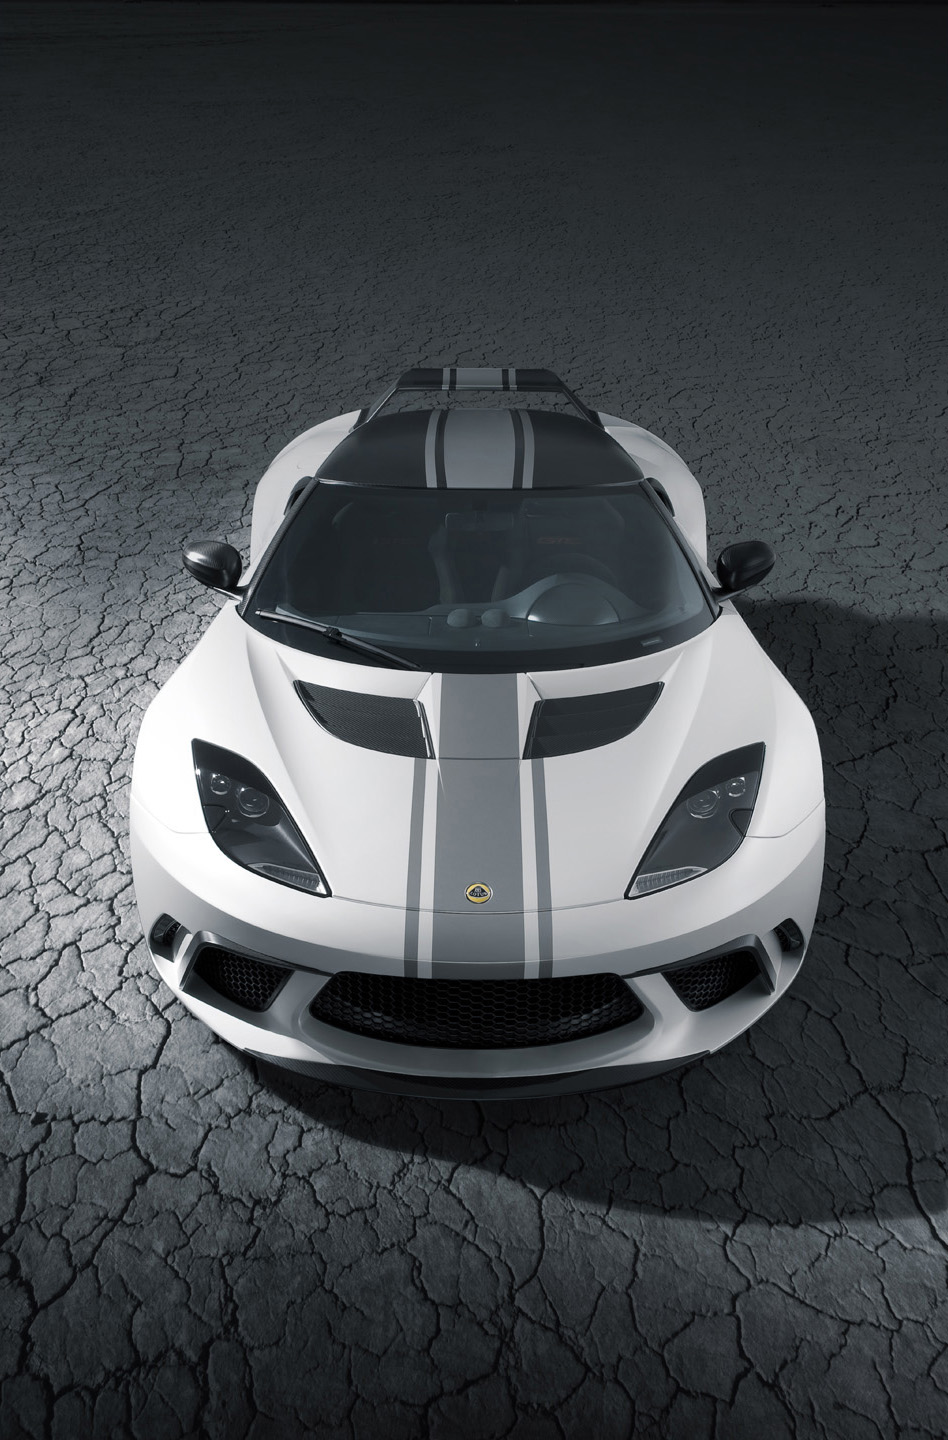 Lotus Evora GTE Road Car Concept photo #1